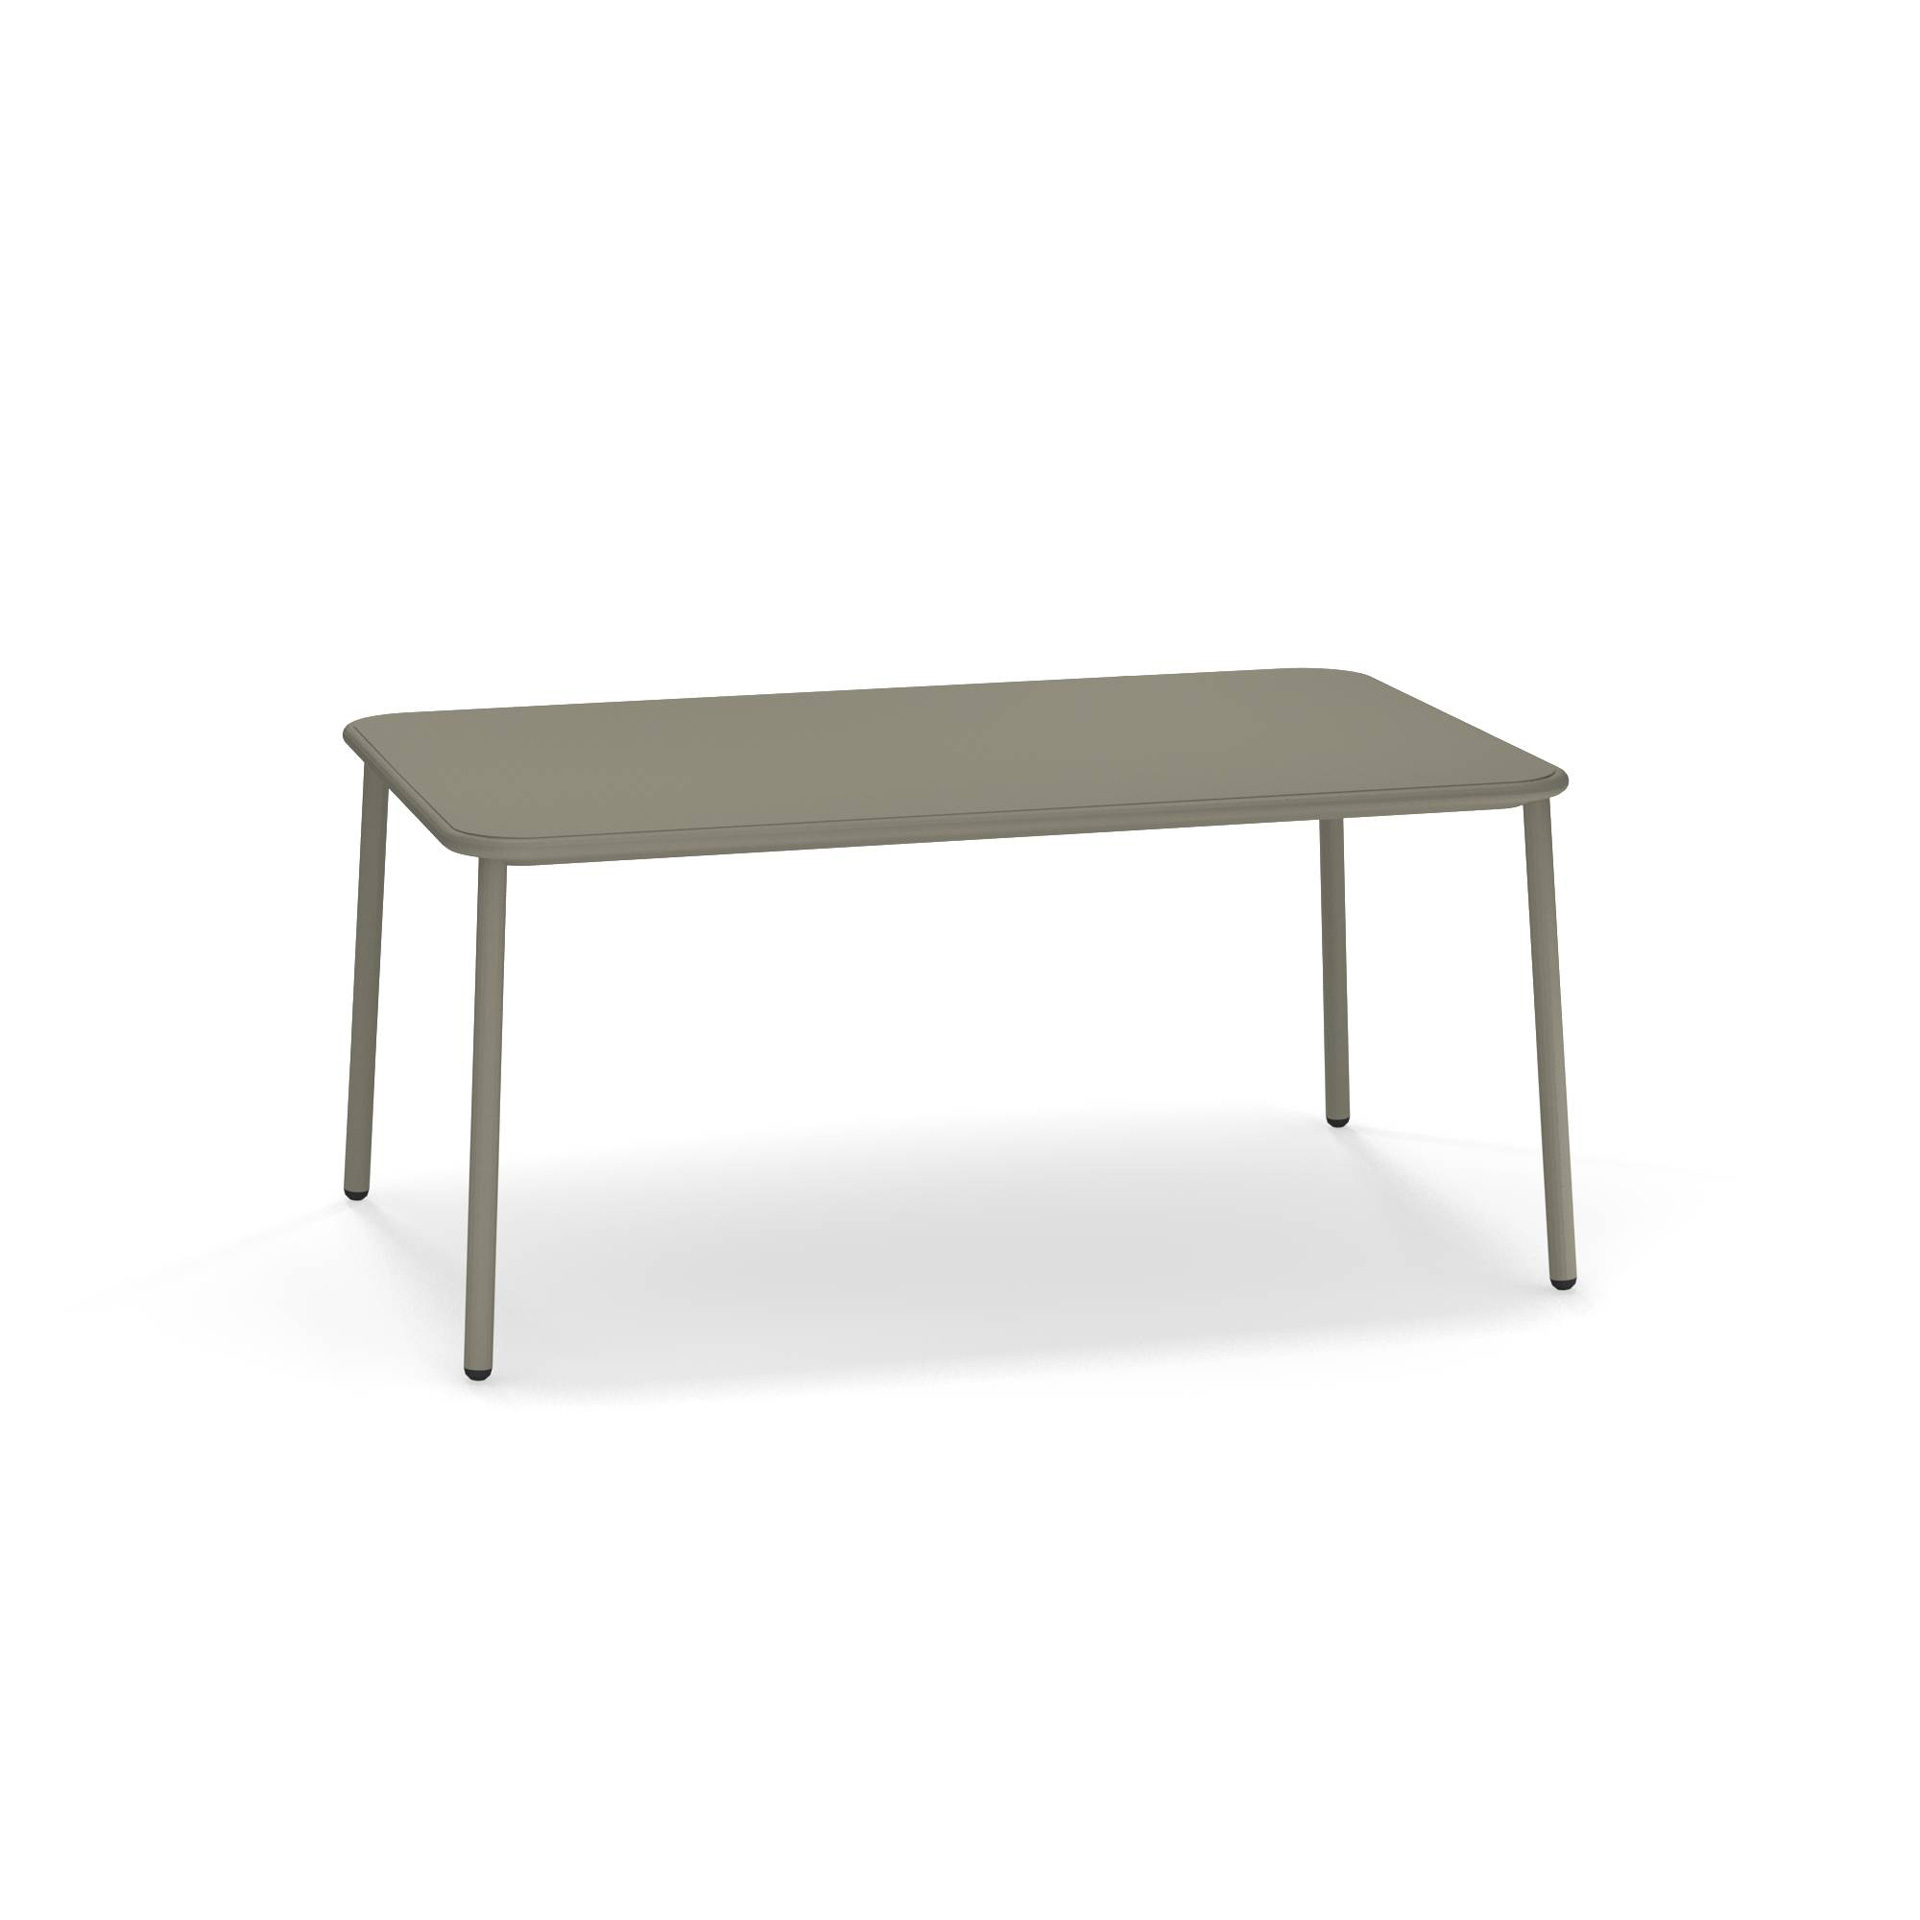 Yard rechteckiger Tisch mit Aluminiumplatte